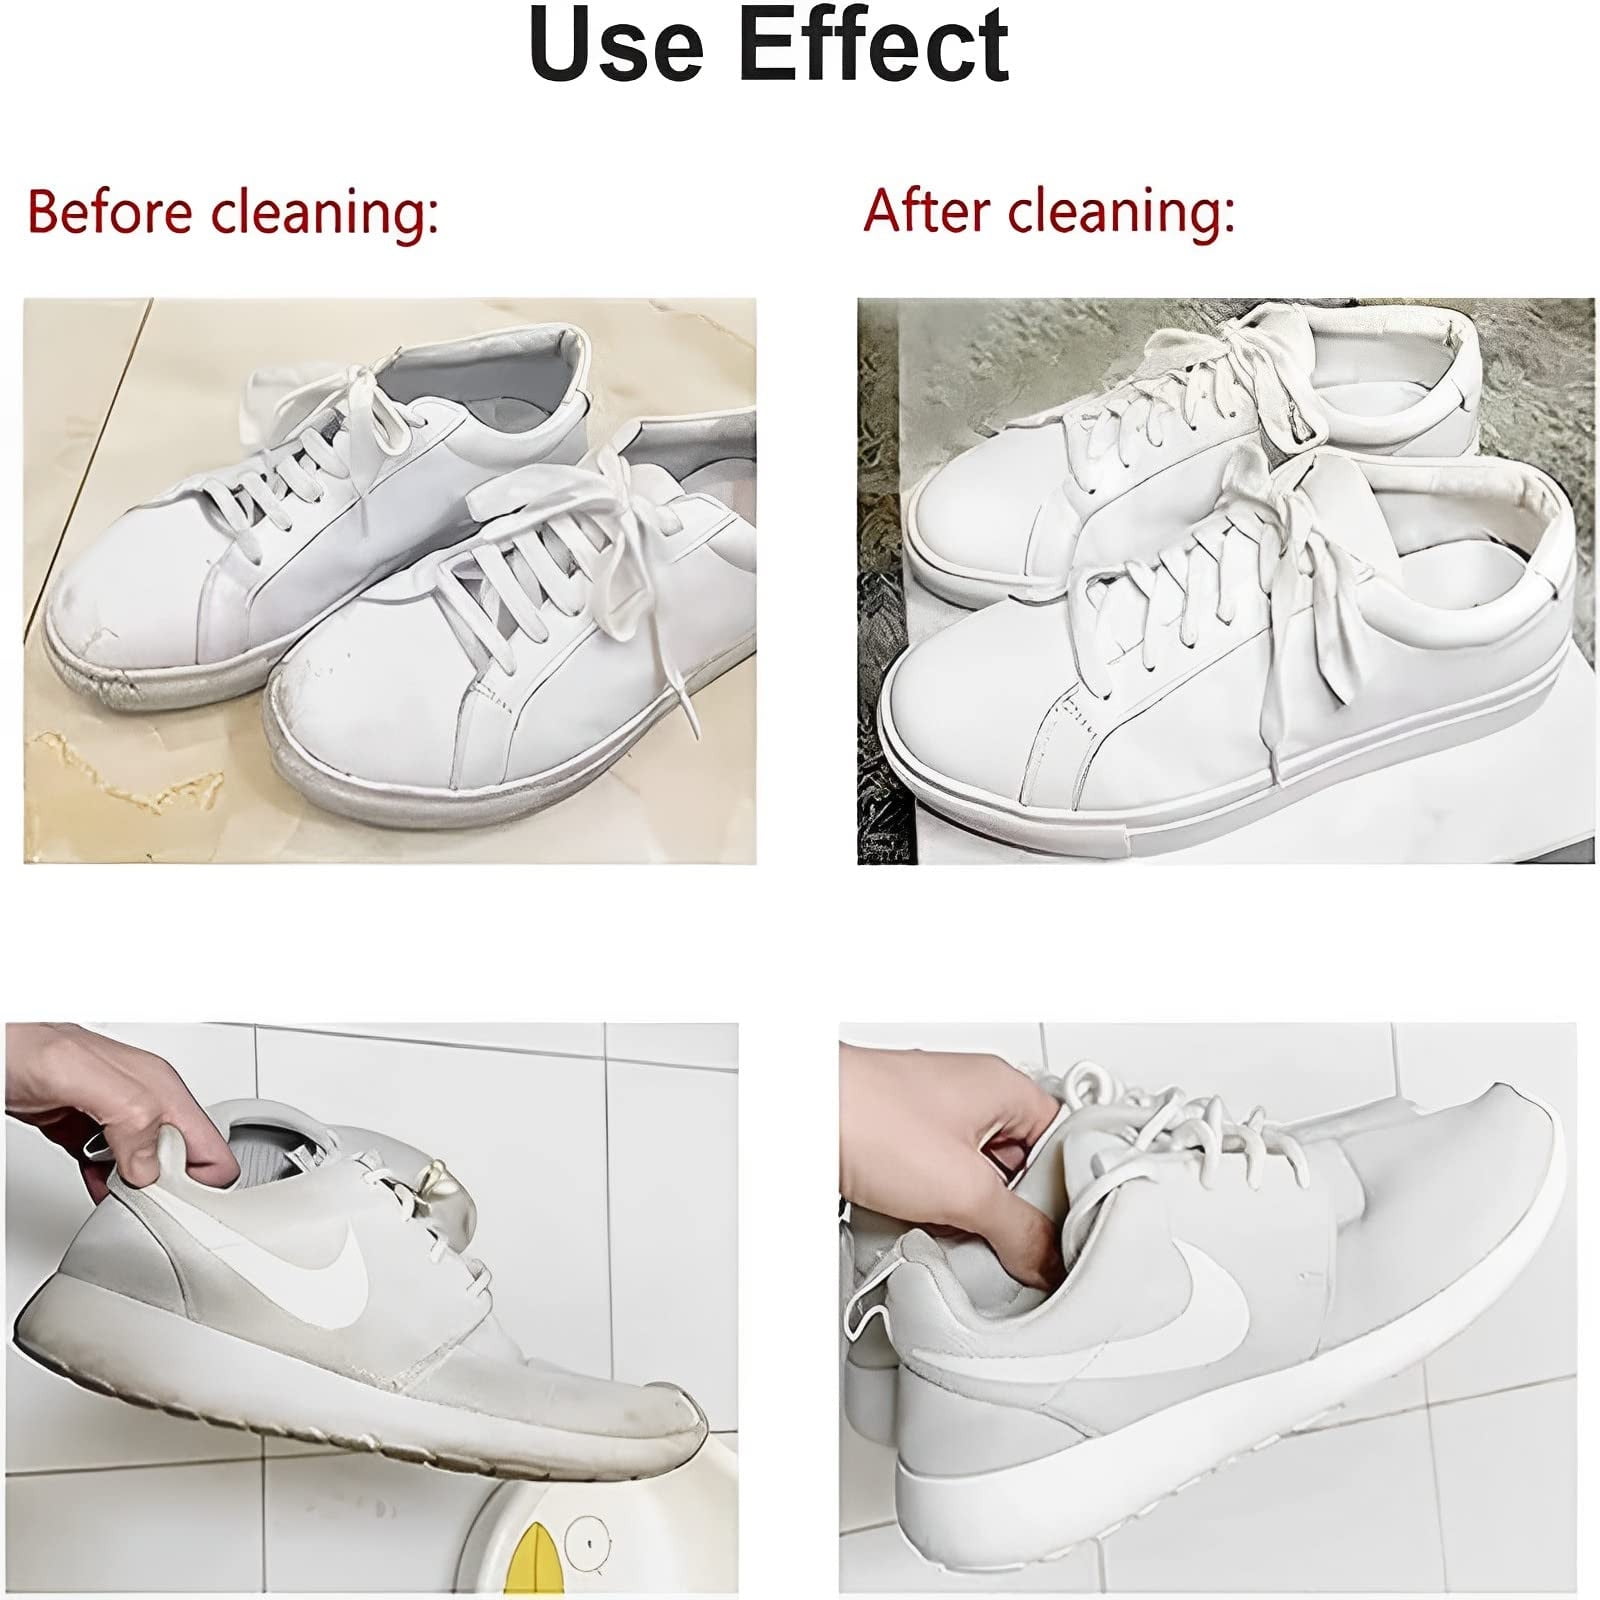  TiLLOw Foamzone 150 Shoe Cleaner,White Shoe Stain